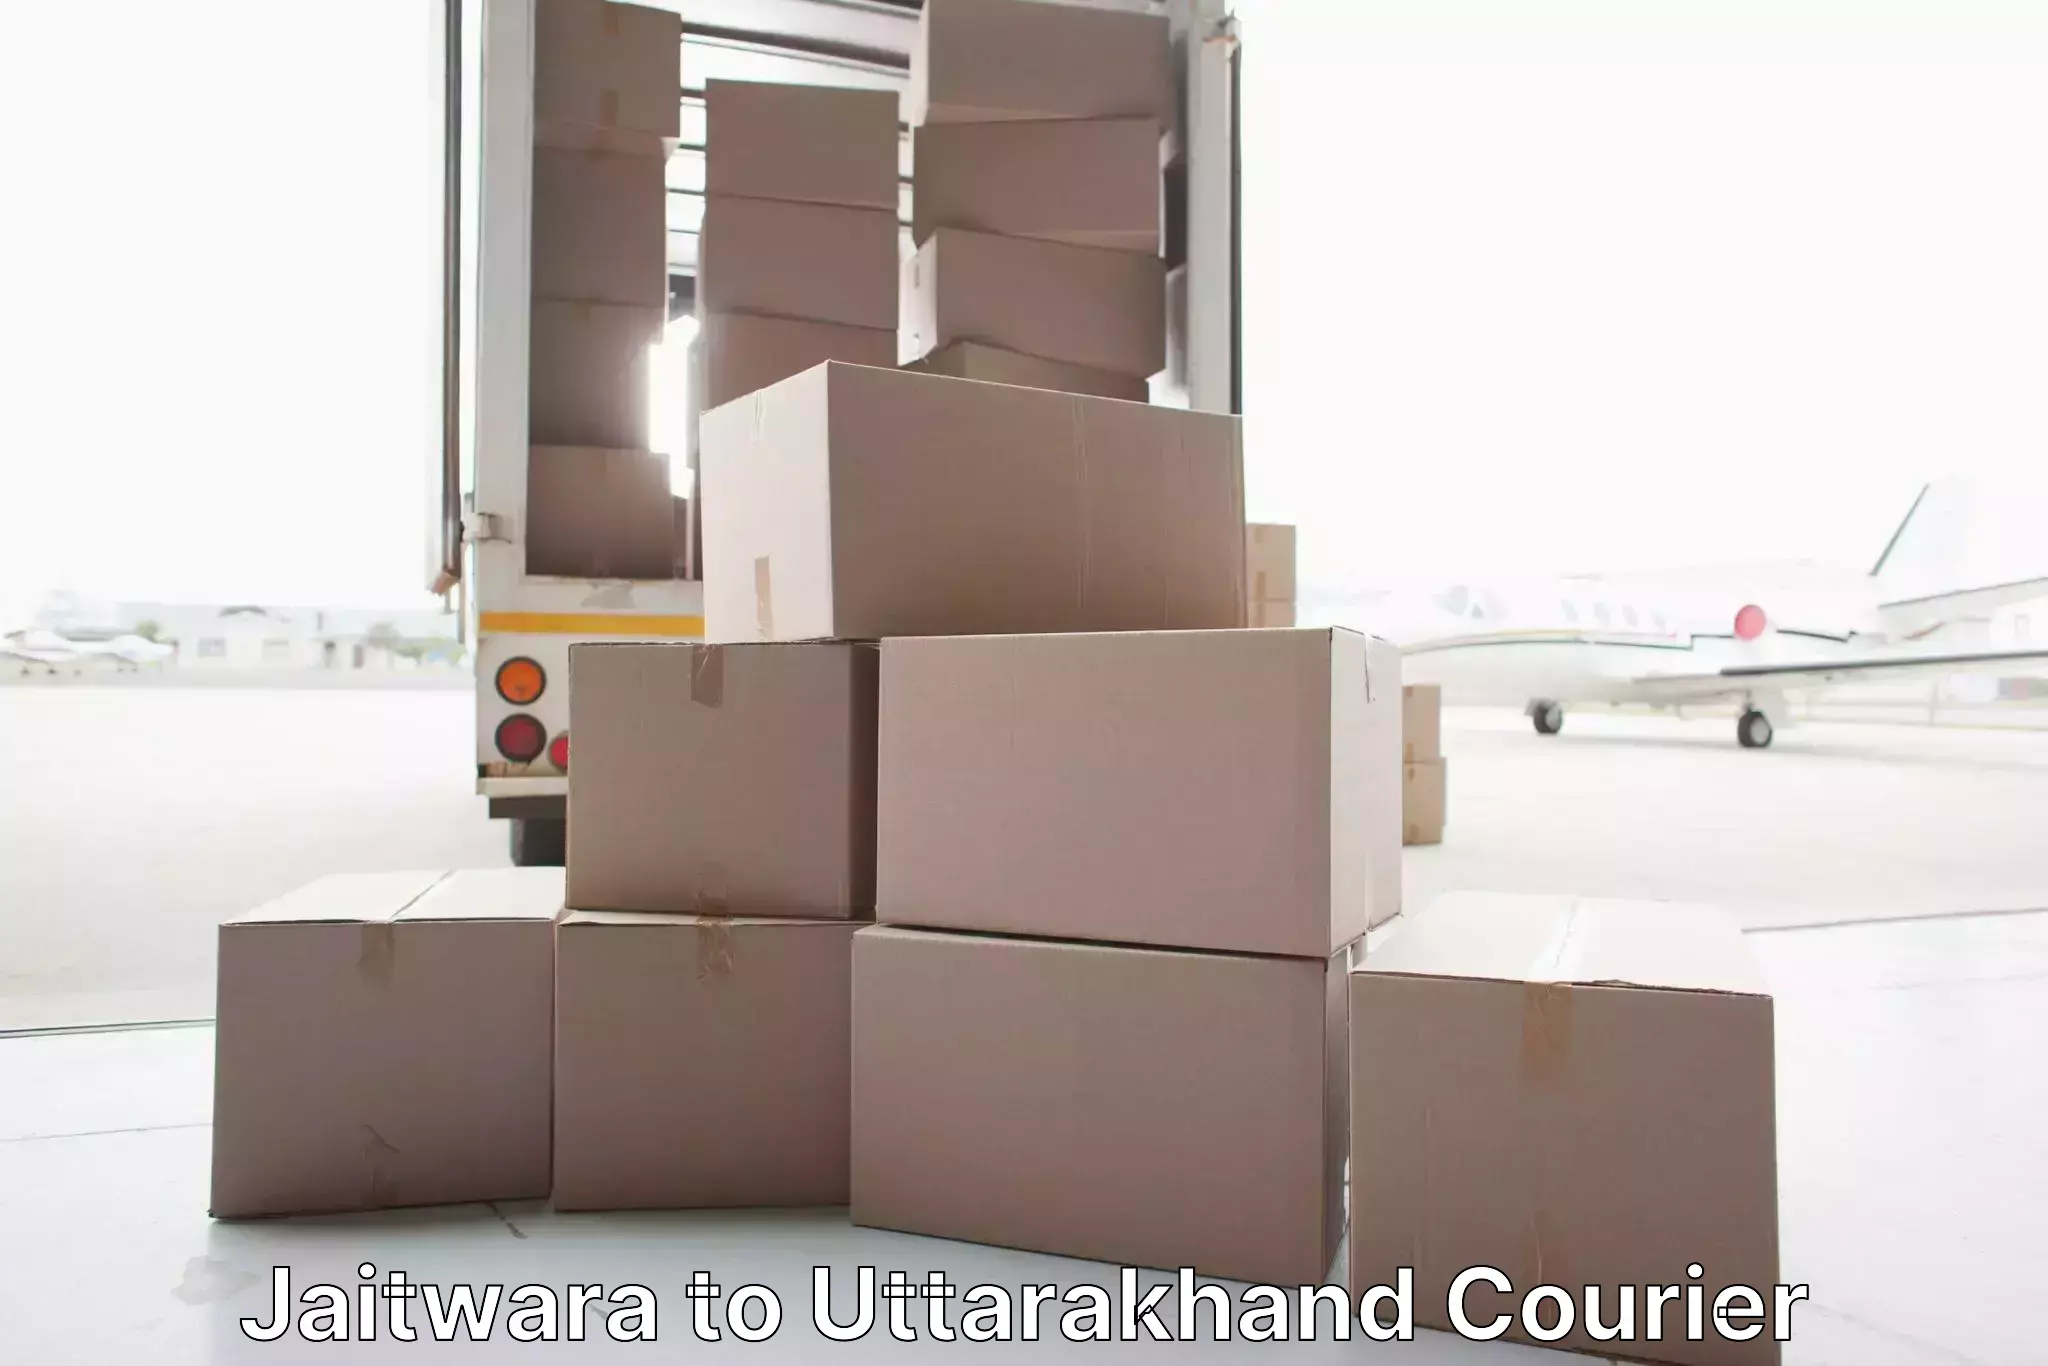 Professional movers and packers in Jaitwara to Udham Singh Nagar